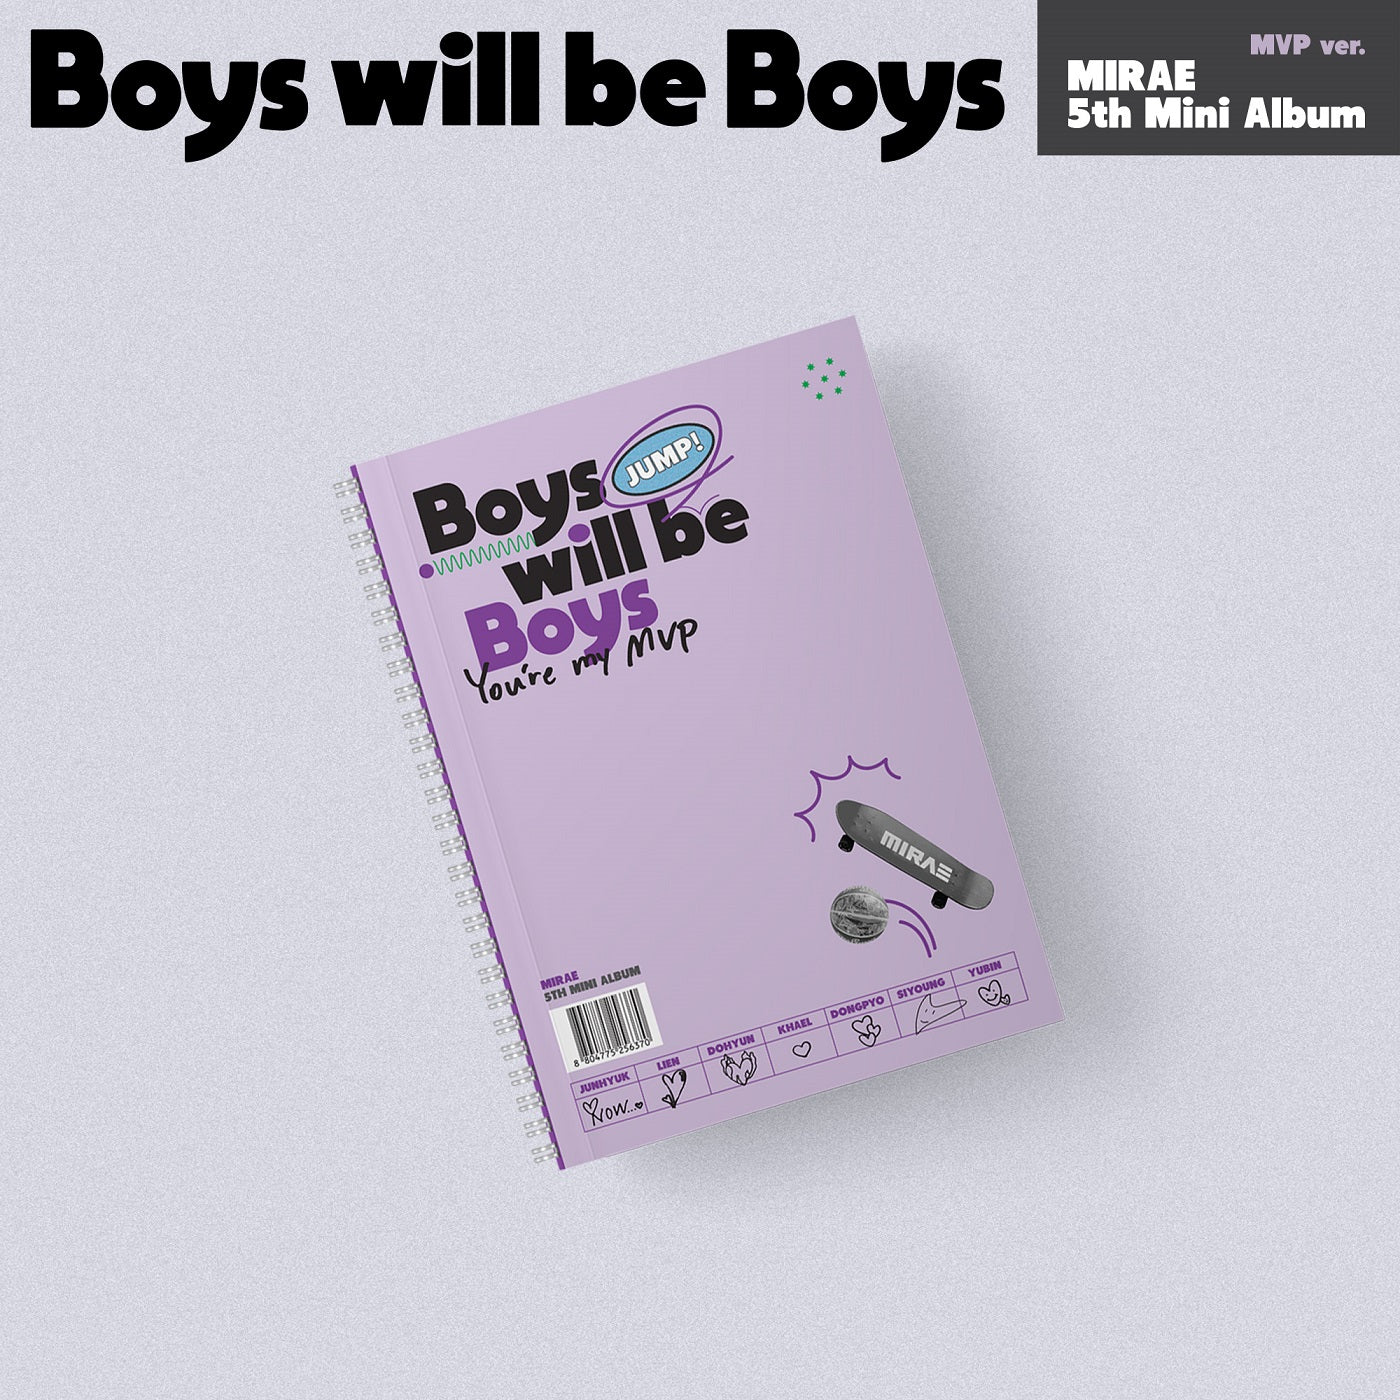 MIRAE 5TH MINI ALBUM 'BOYS WILL BE BOYS' MVP VERSION COVER